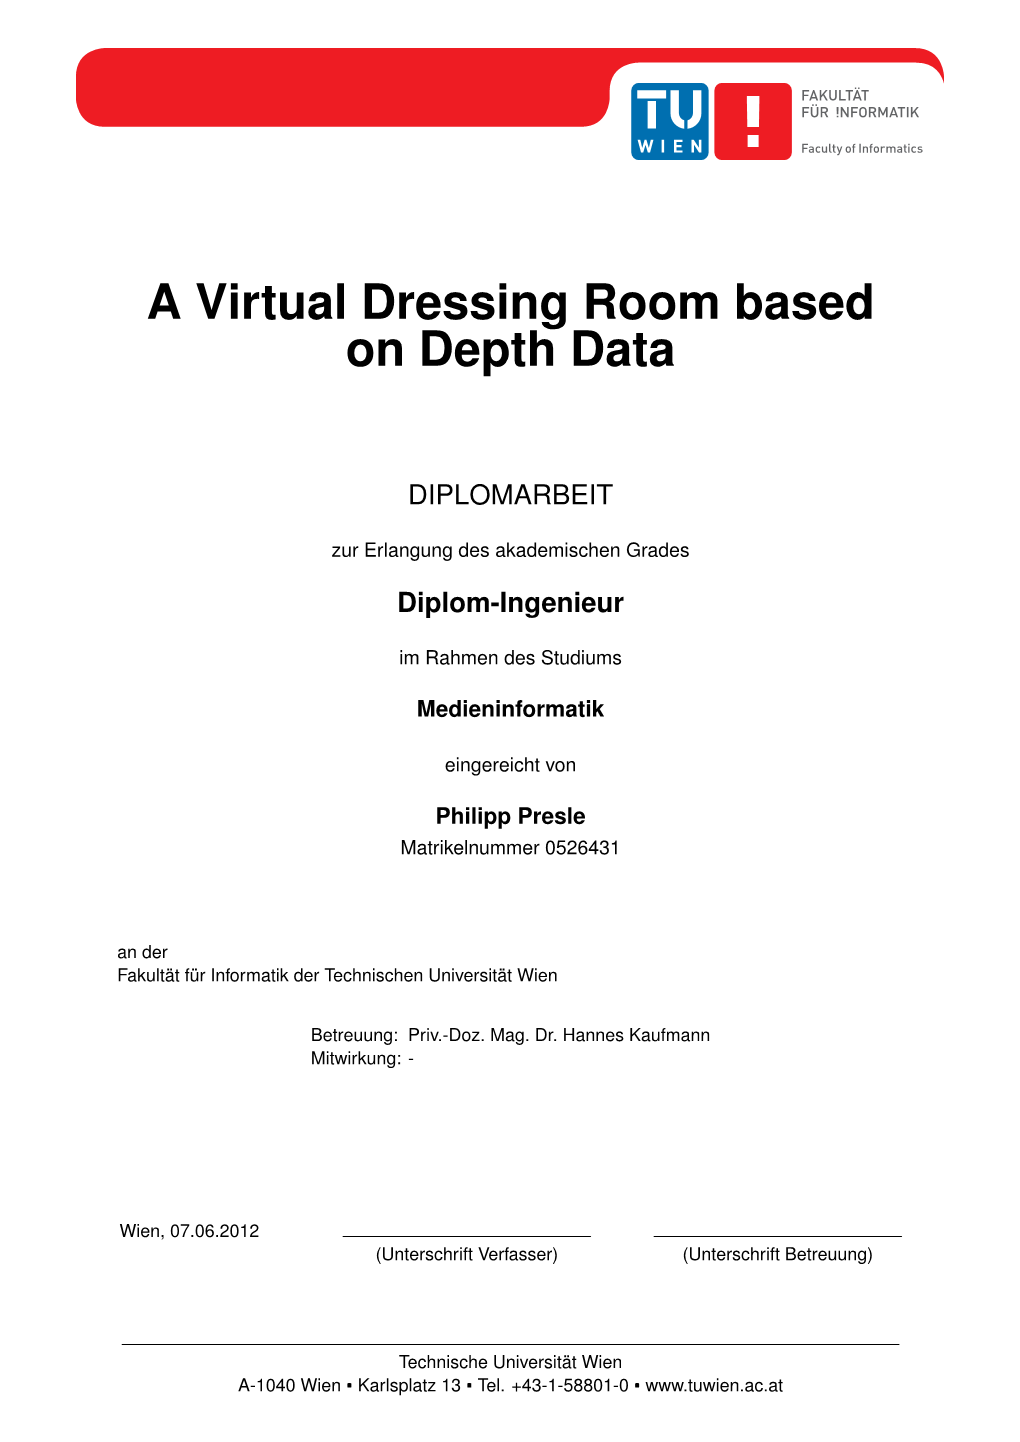 A Virtual Dressing Room Based on Depth Data